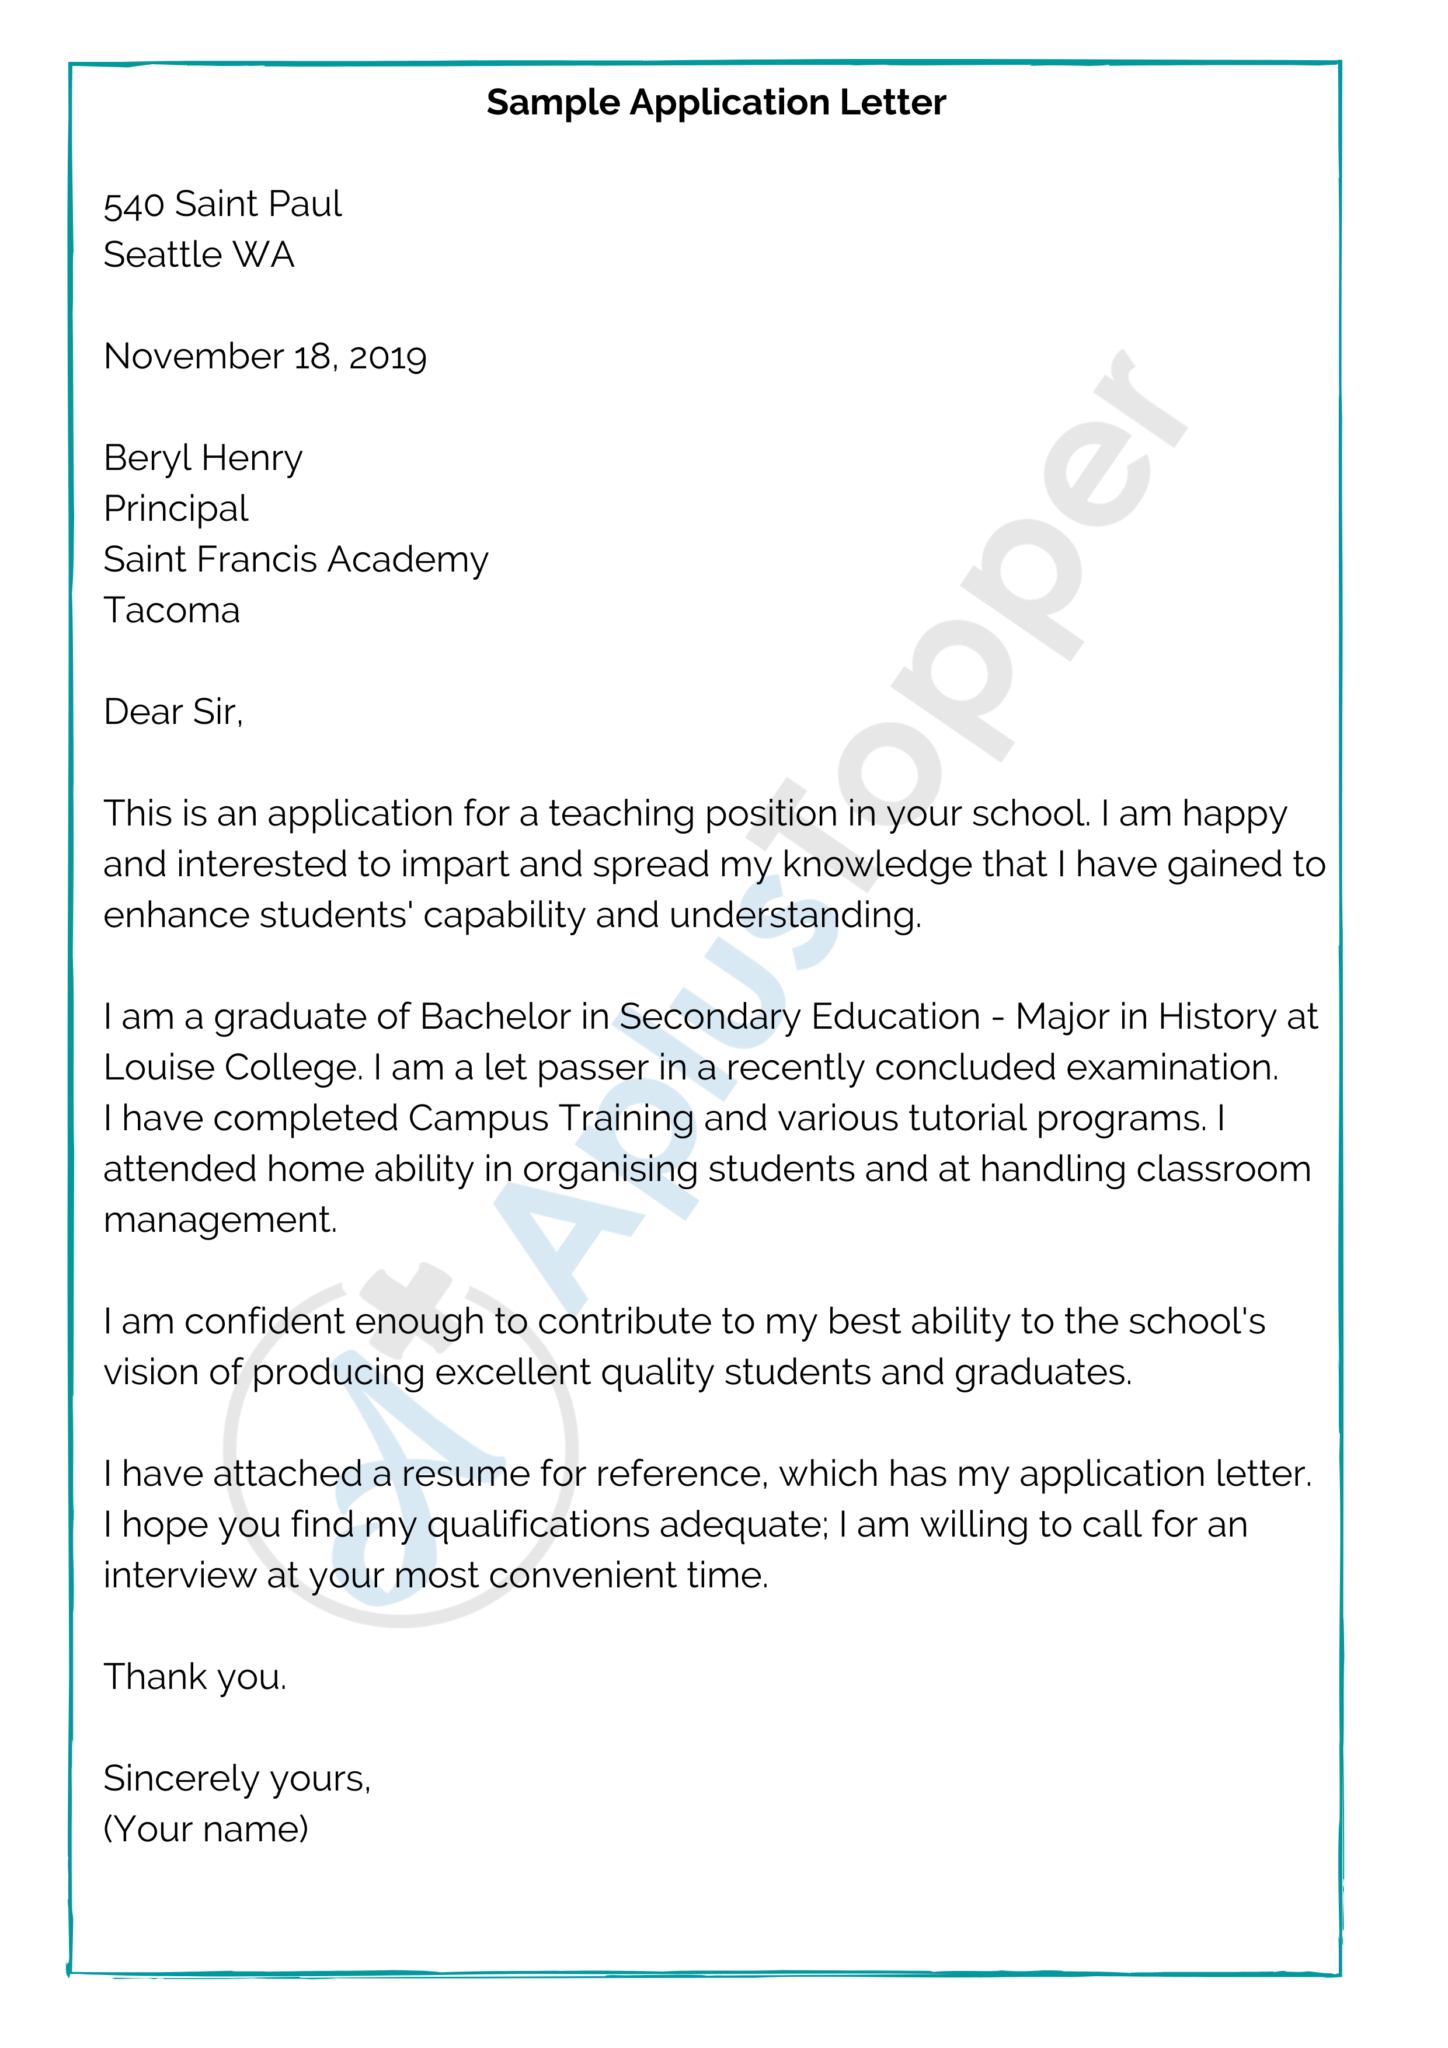 pdf application letter